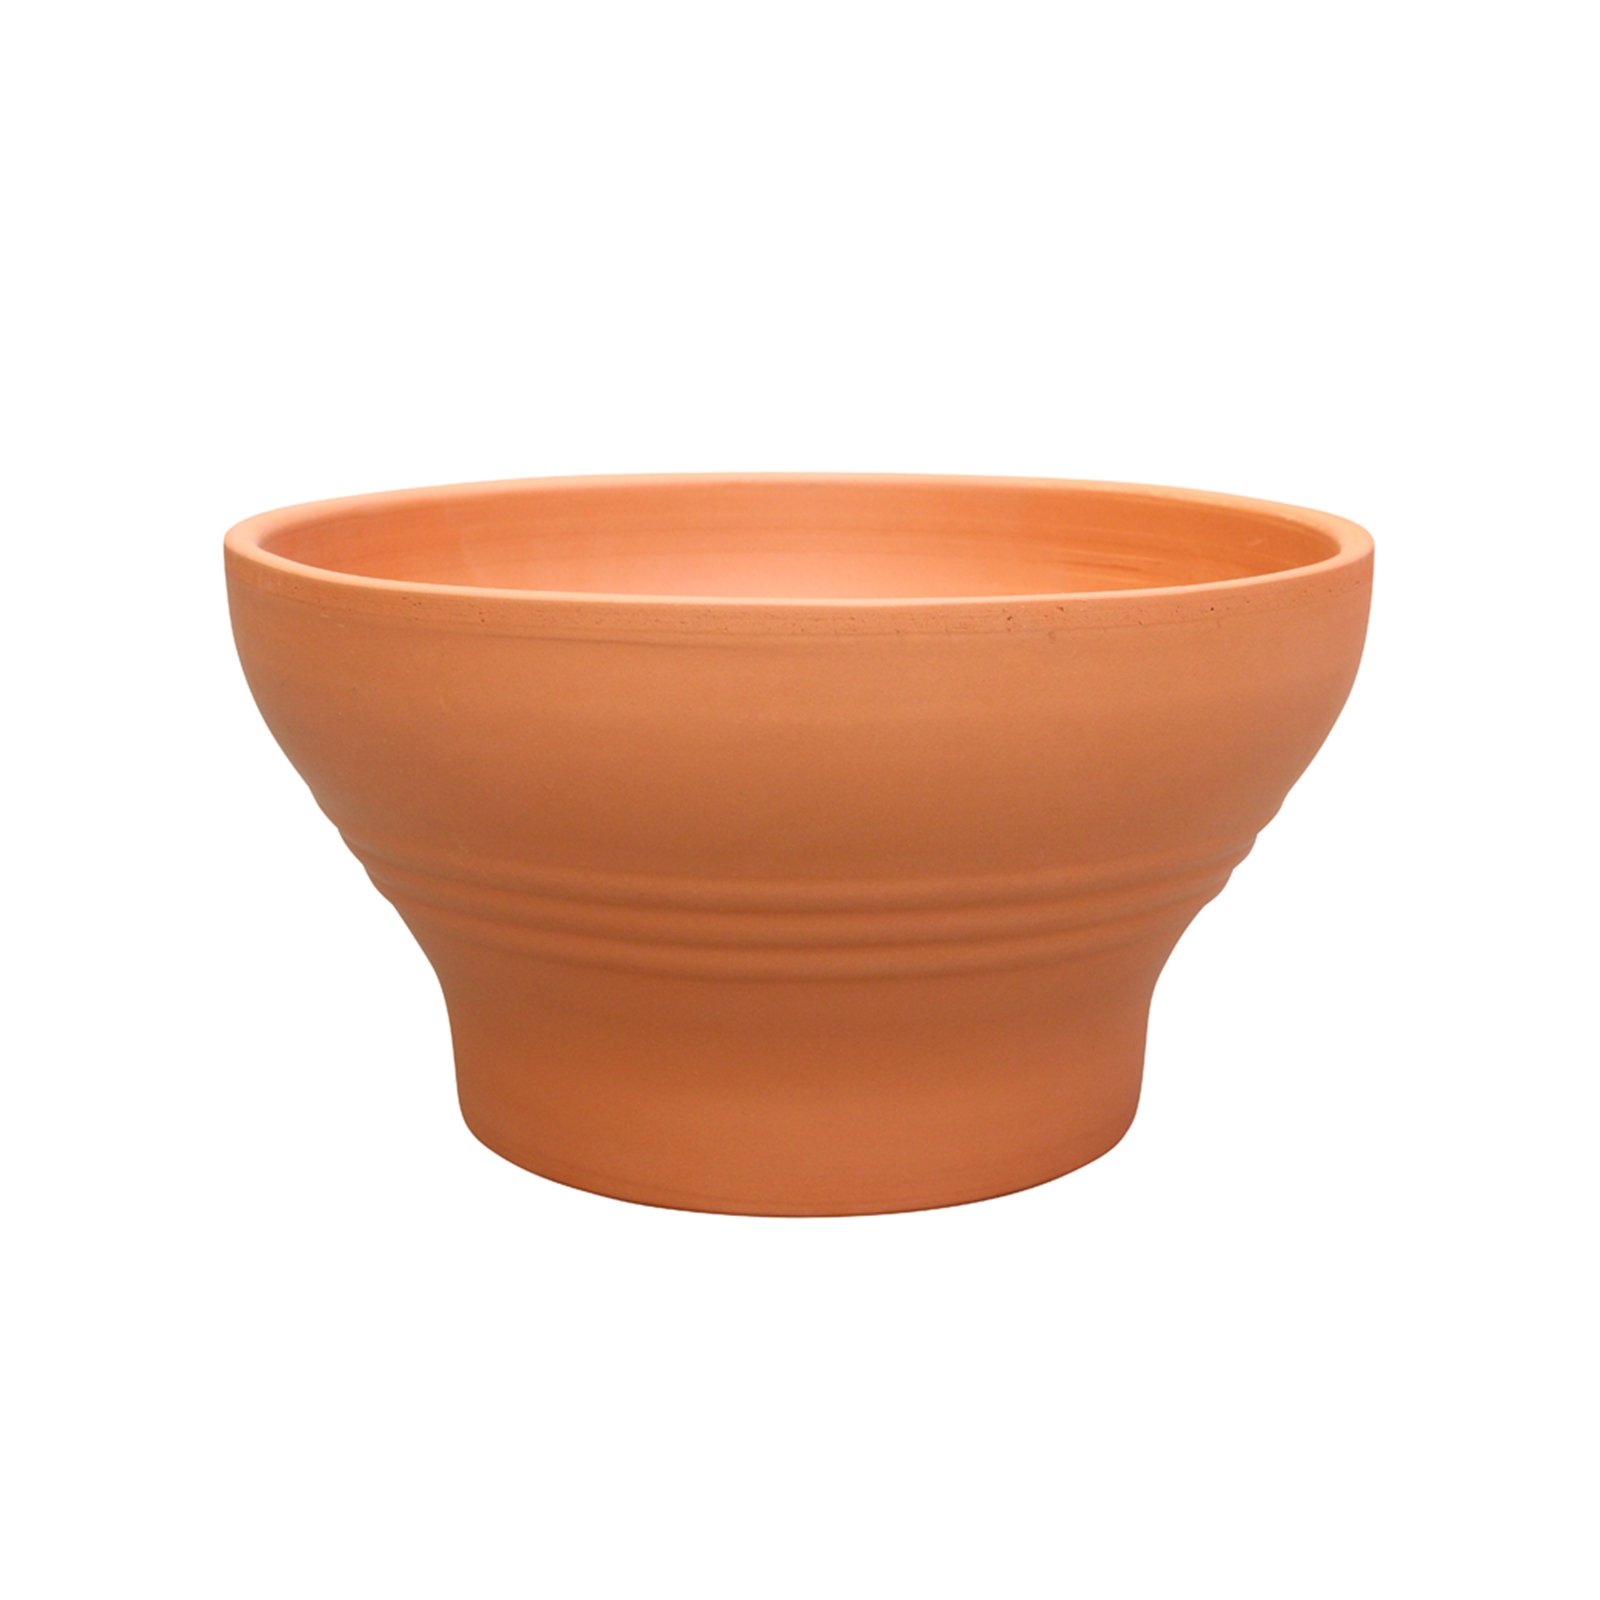 Northcote Pottery 21cm Florentine Italian Collection Terracotta Bowl